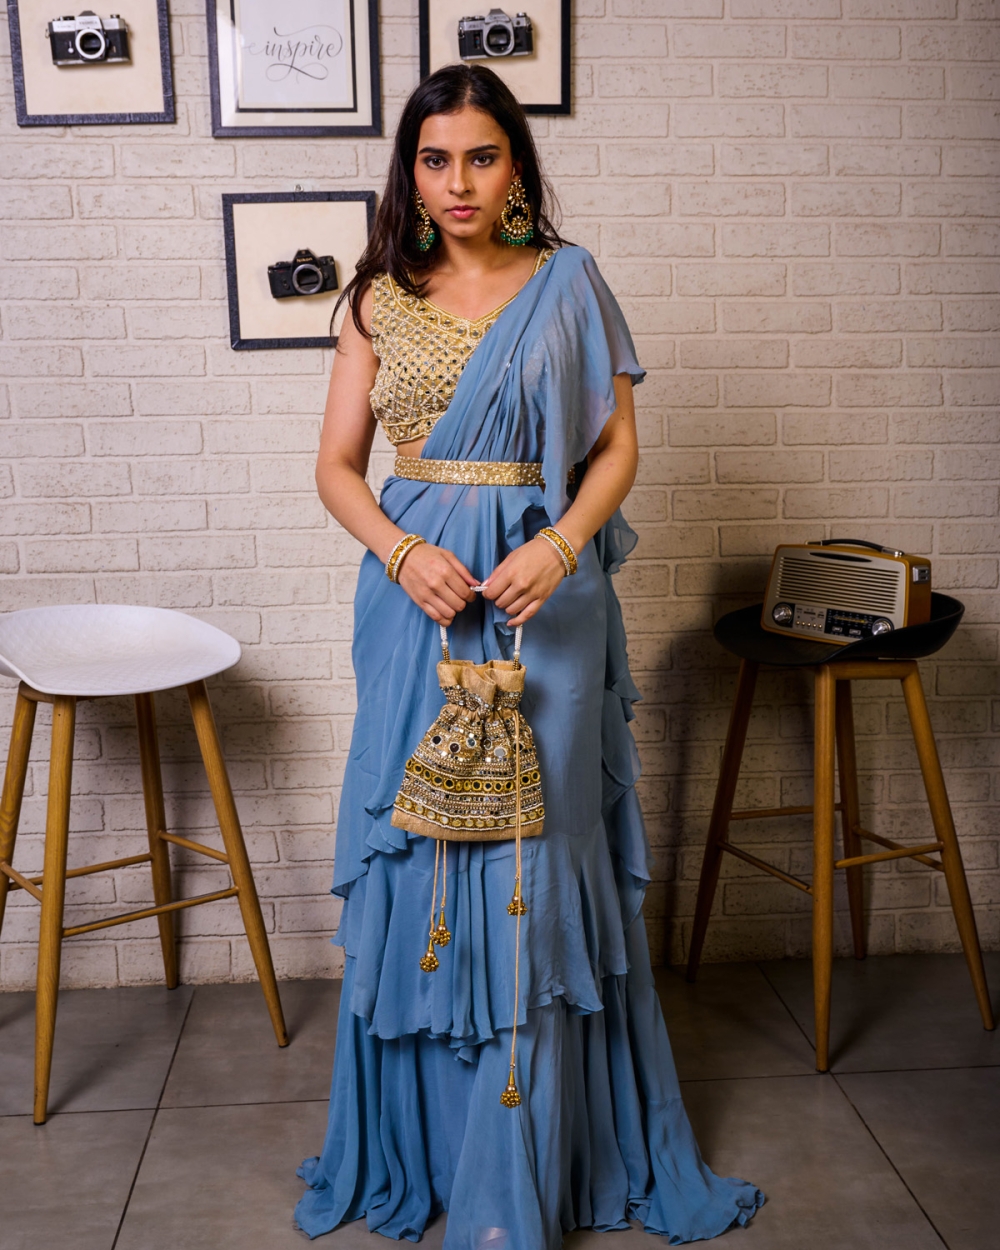 Steel Blue Draped Ruffle Saree With Mirror Bustier - Fashion Brand & Designer Priti Sahni